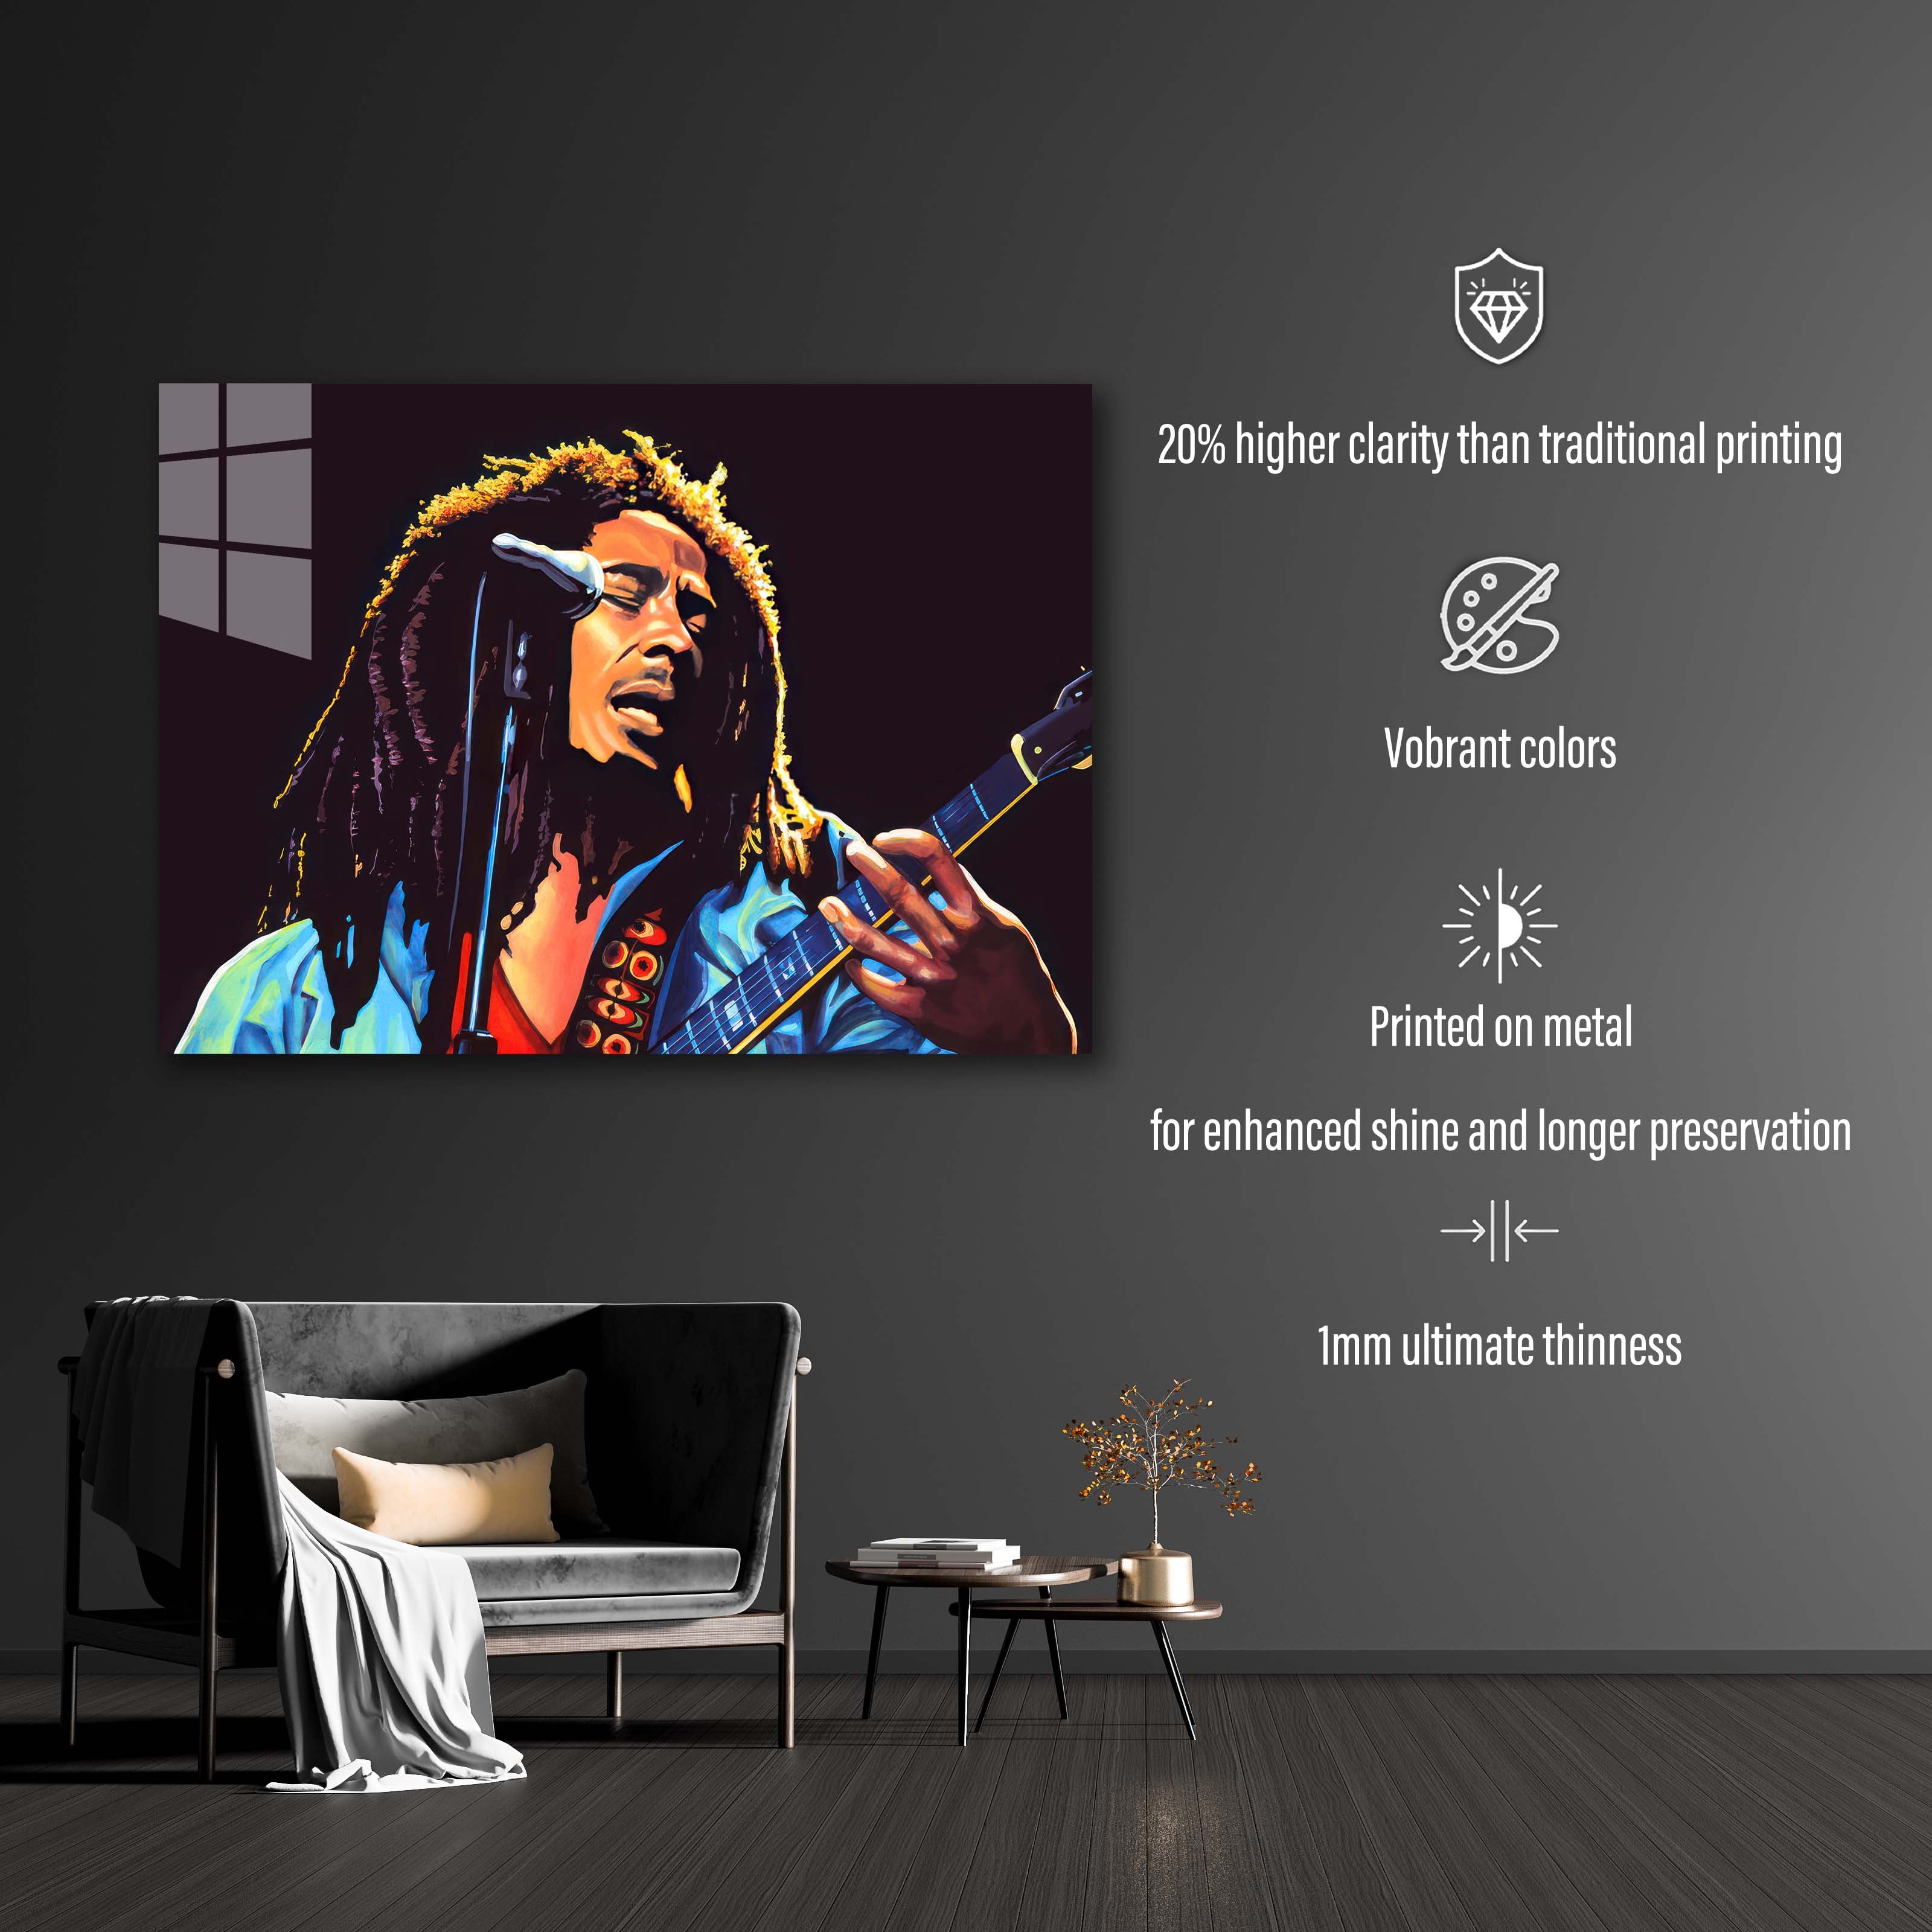 Bob Marley-designed by @Vinahayum